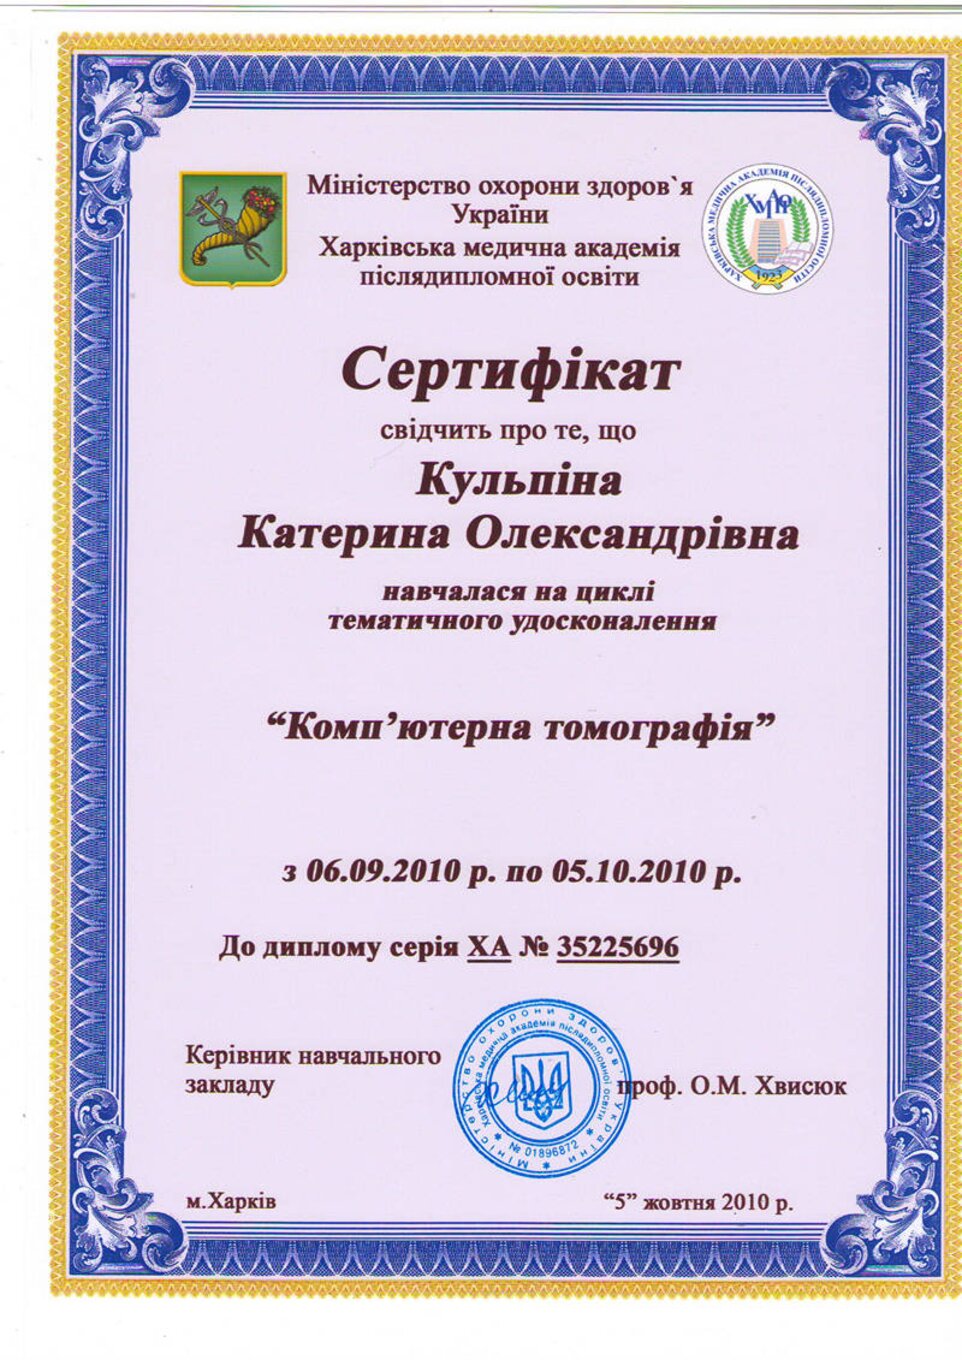 certificates/kulpina-katerina-oleksandrivna/hemomedika-cert-kulpina-2010-kursy_kt.jpg